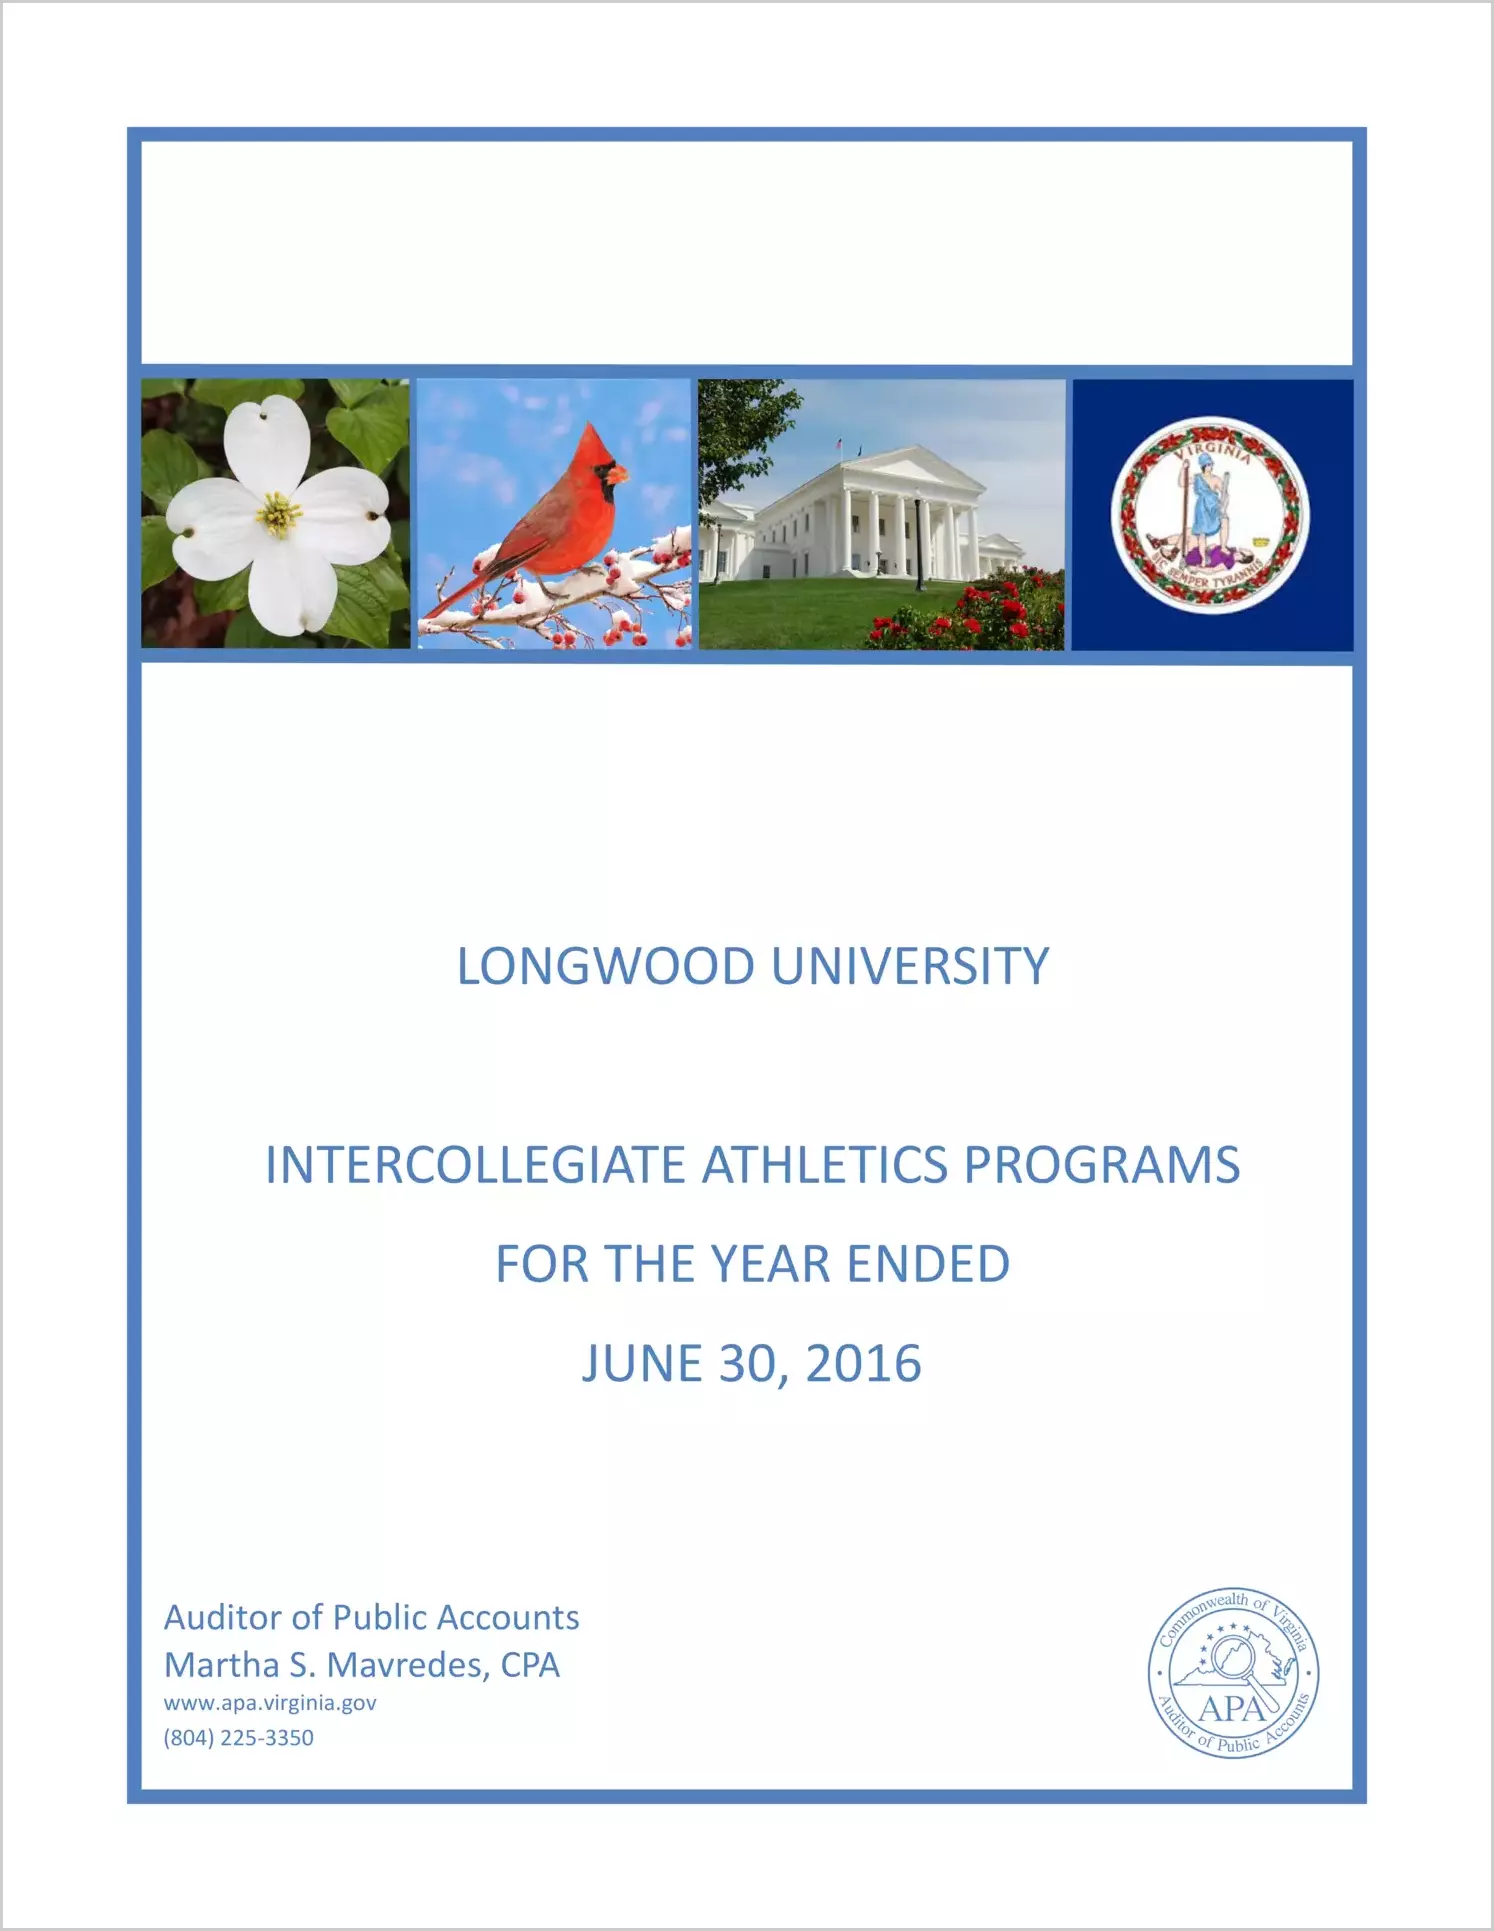 Longwood University Intercollegiate Athletics Programs for the year ended June 30, 2016